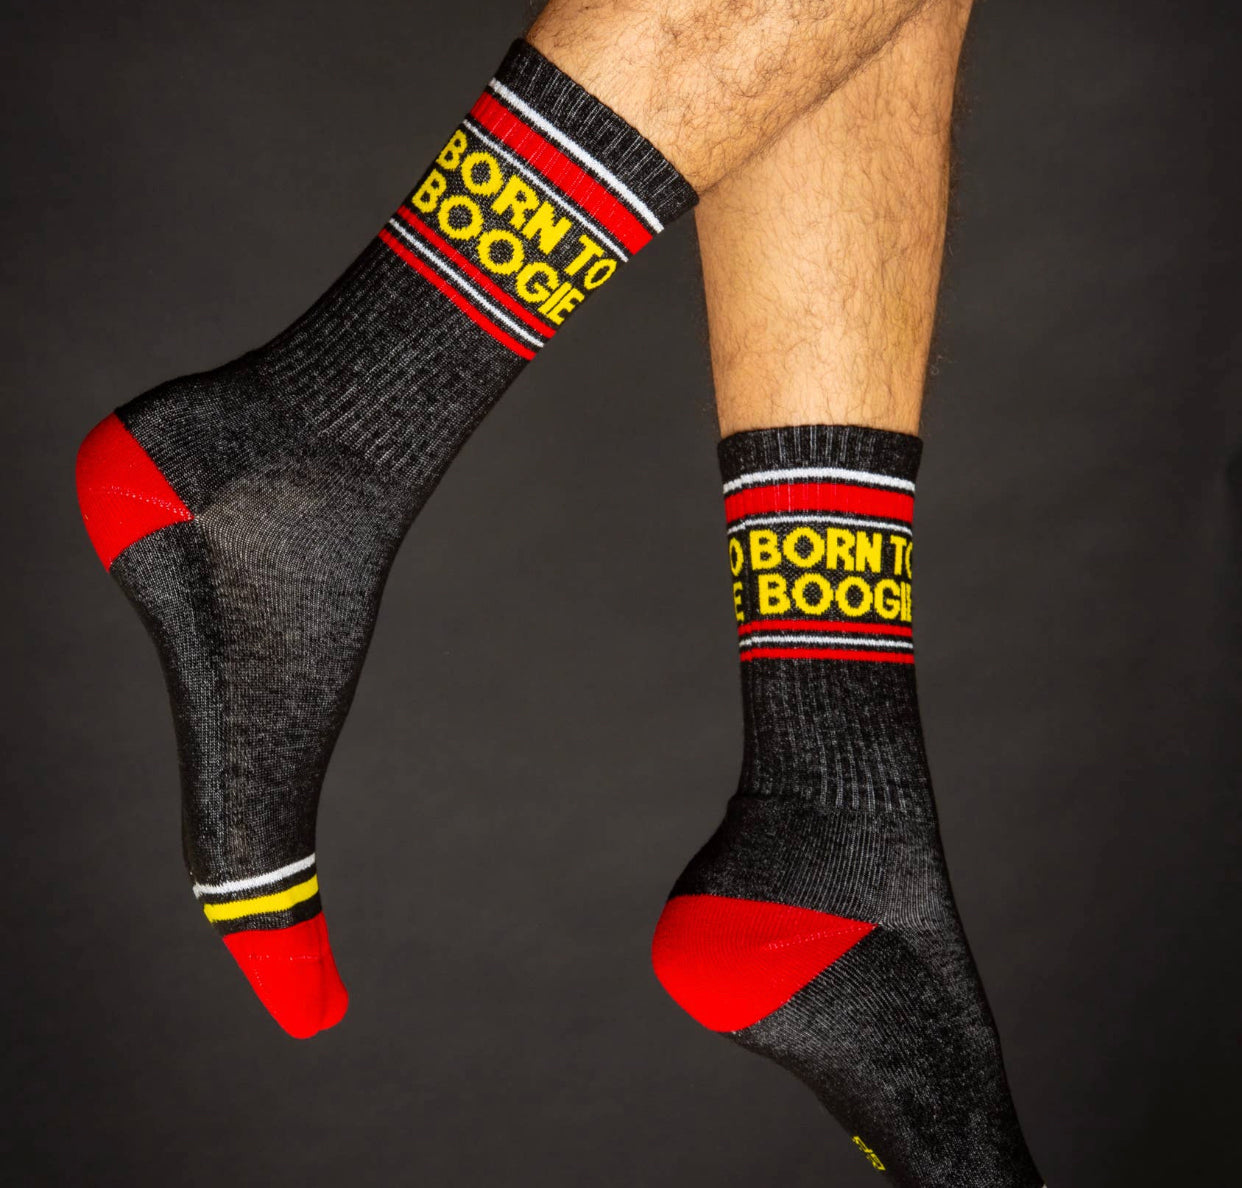 Born To Boogie Gym Crew Socks